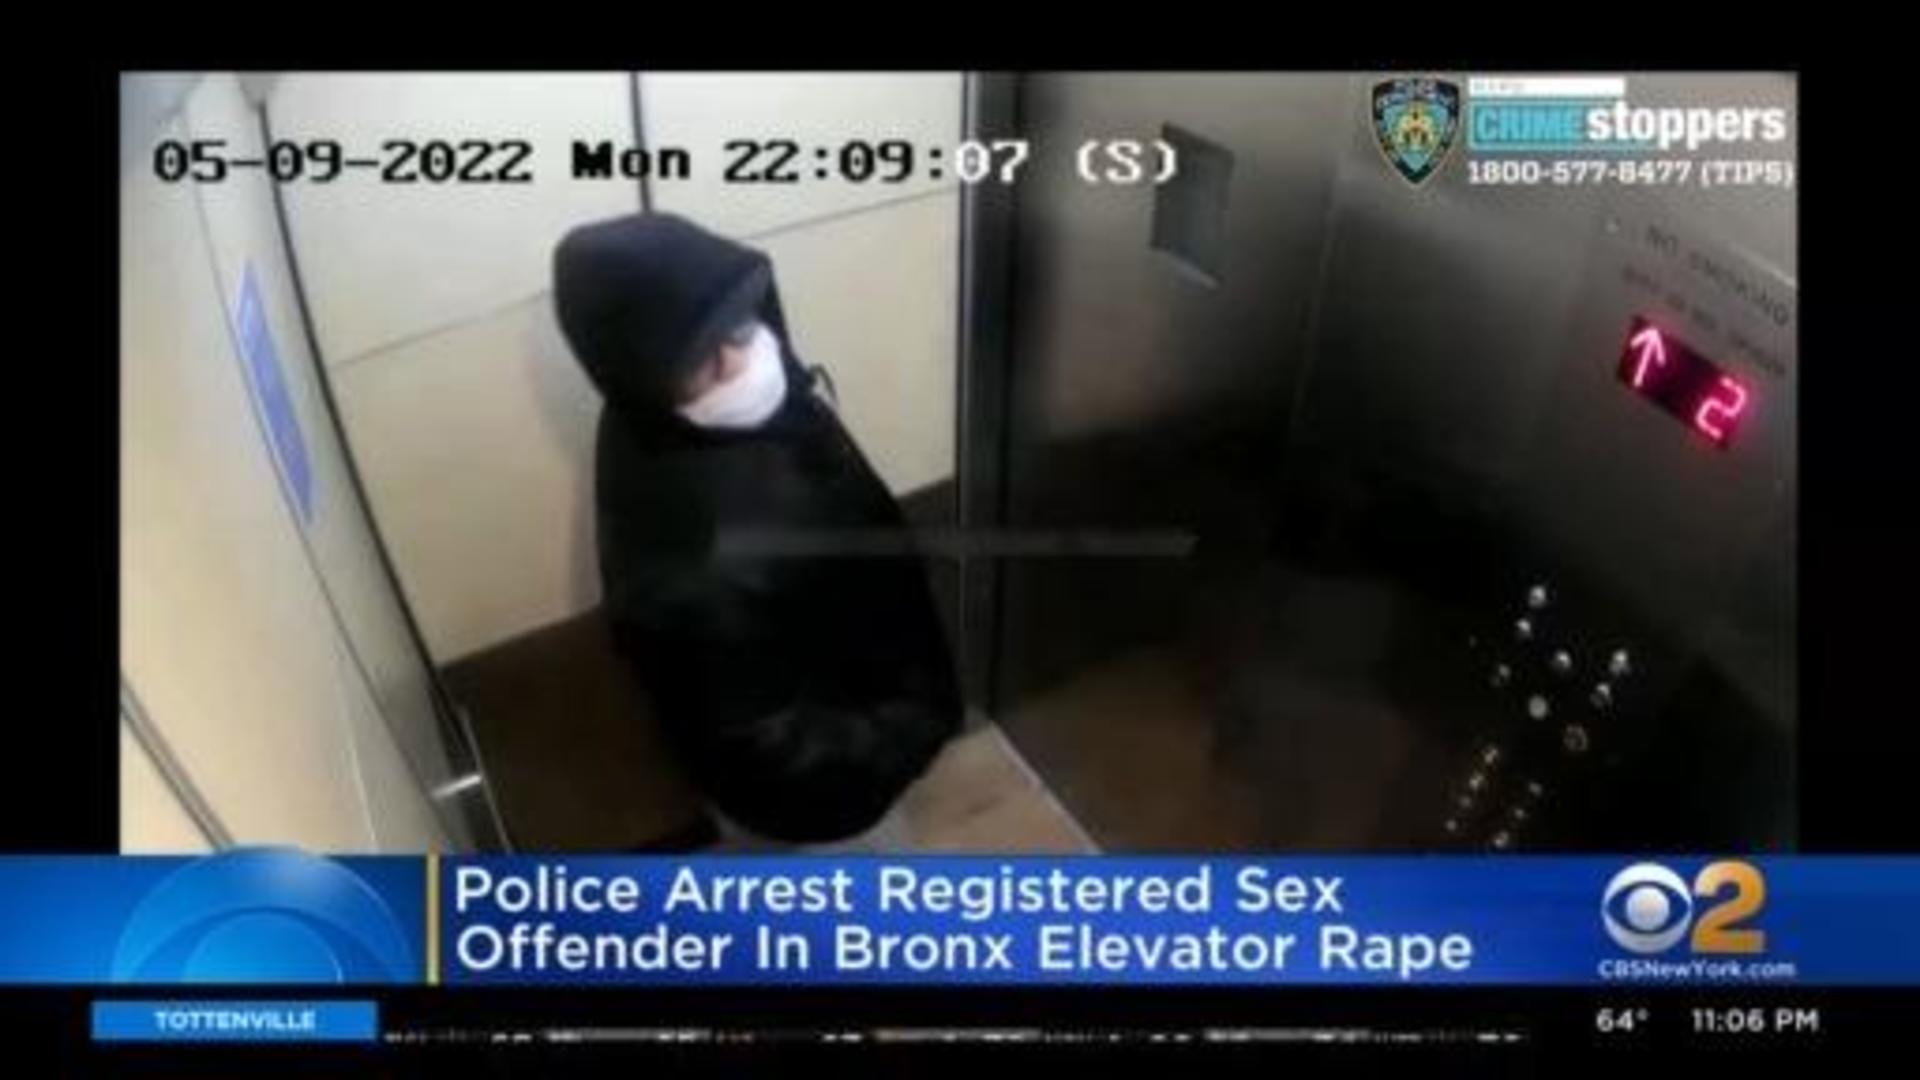 Fullrapesex - Police arrest registered sex offender in Bronx elevator rape - CBS New York